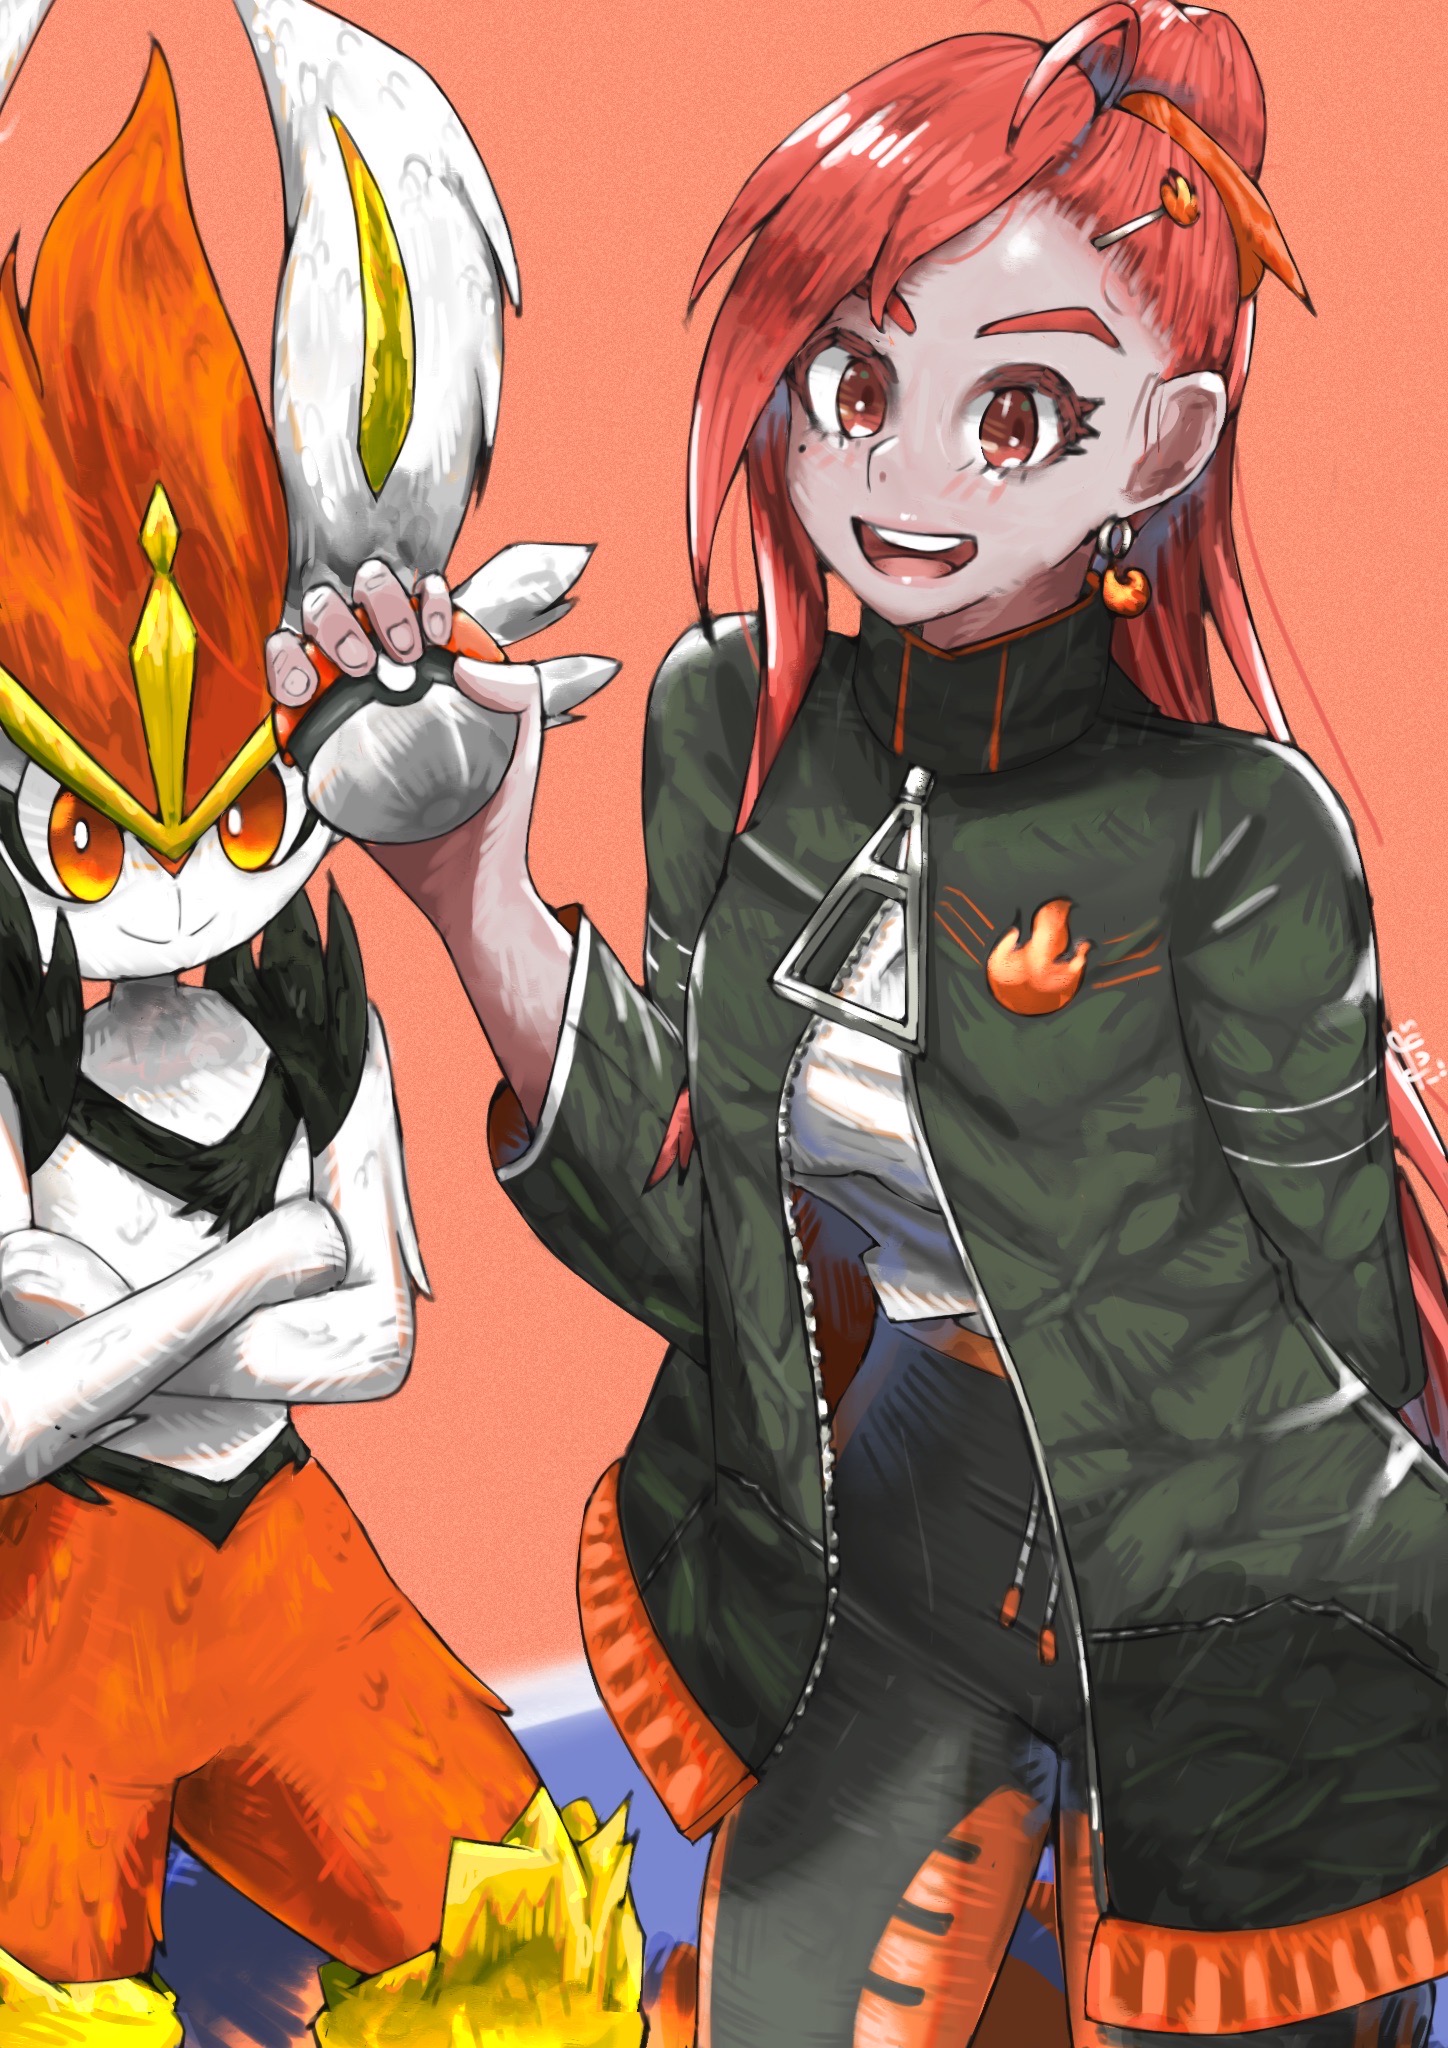 Pokemon Sword and Shield - Female Trainer by GENZOMAN on DeviantArt